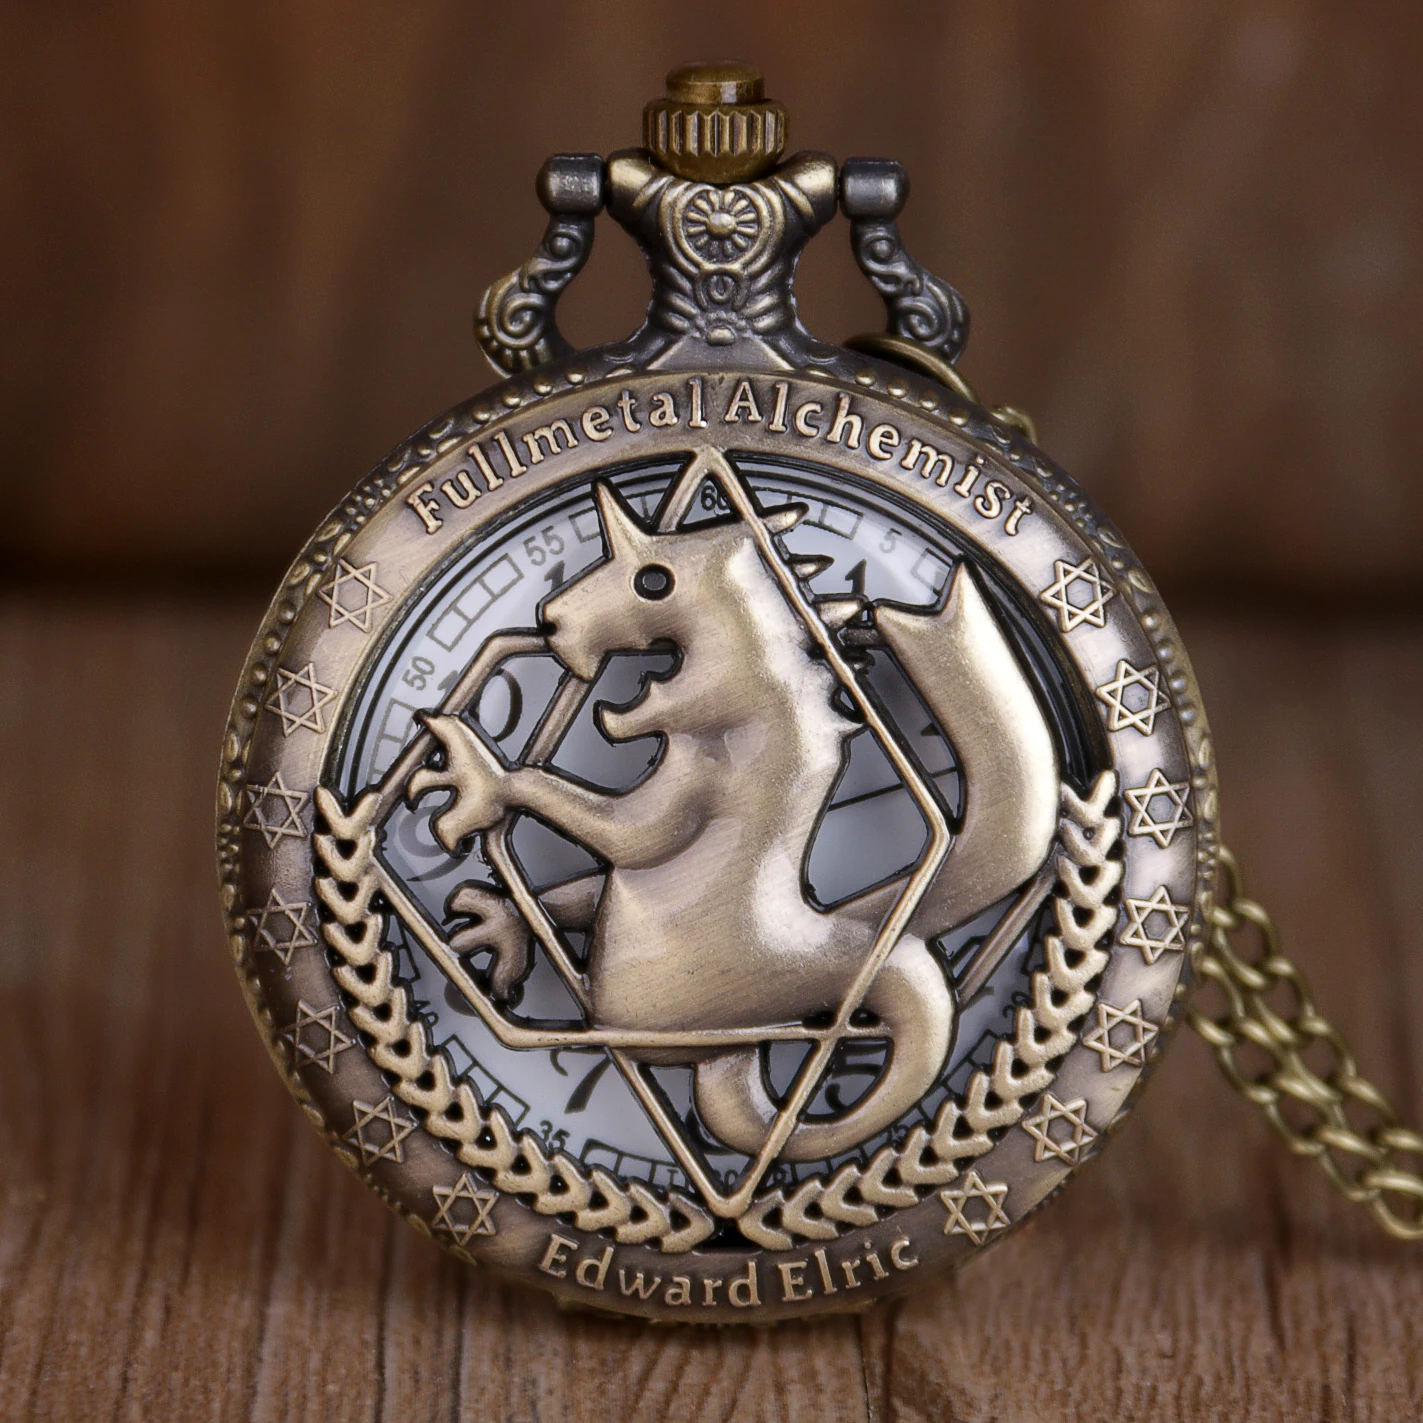 

High Quality Bronze Full Metal Alchemist Pocket Watch Vintage Chain Watches Steampunk Necklace Pendant Quartz Clock Gifts TD2015